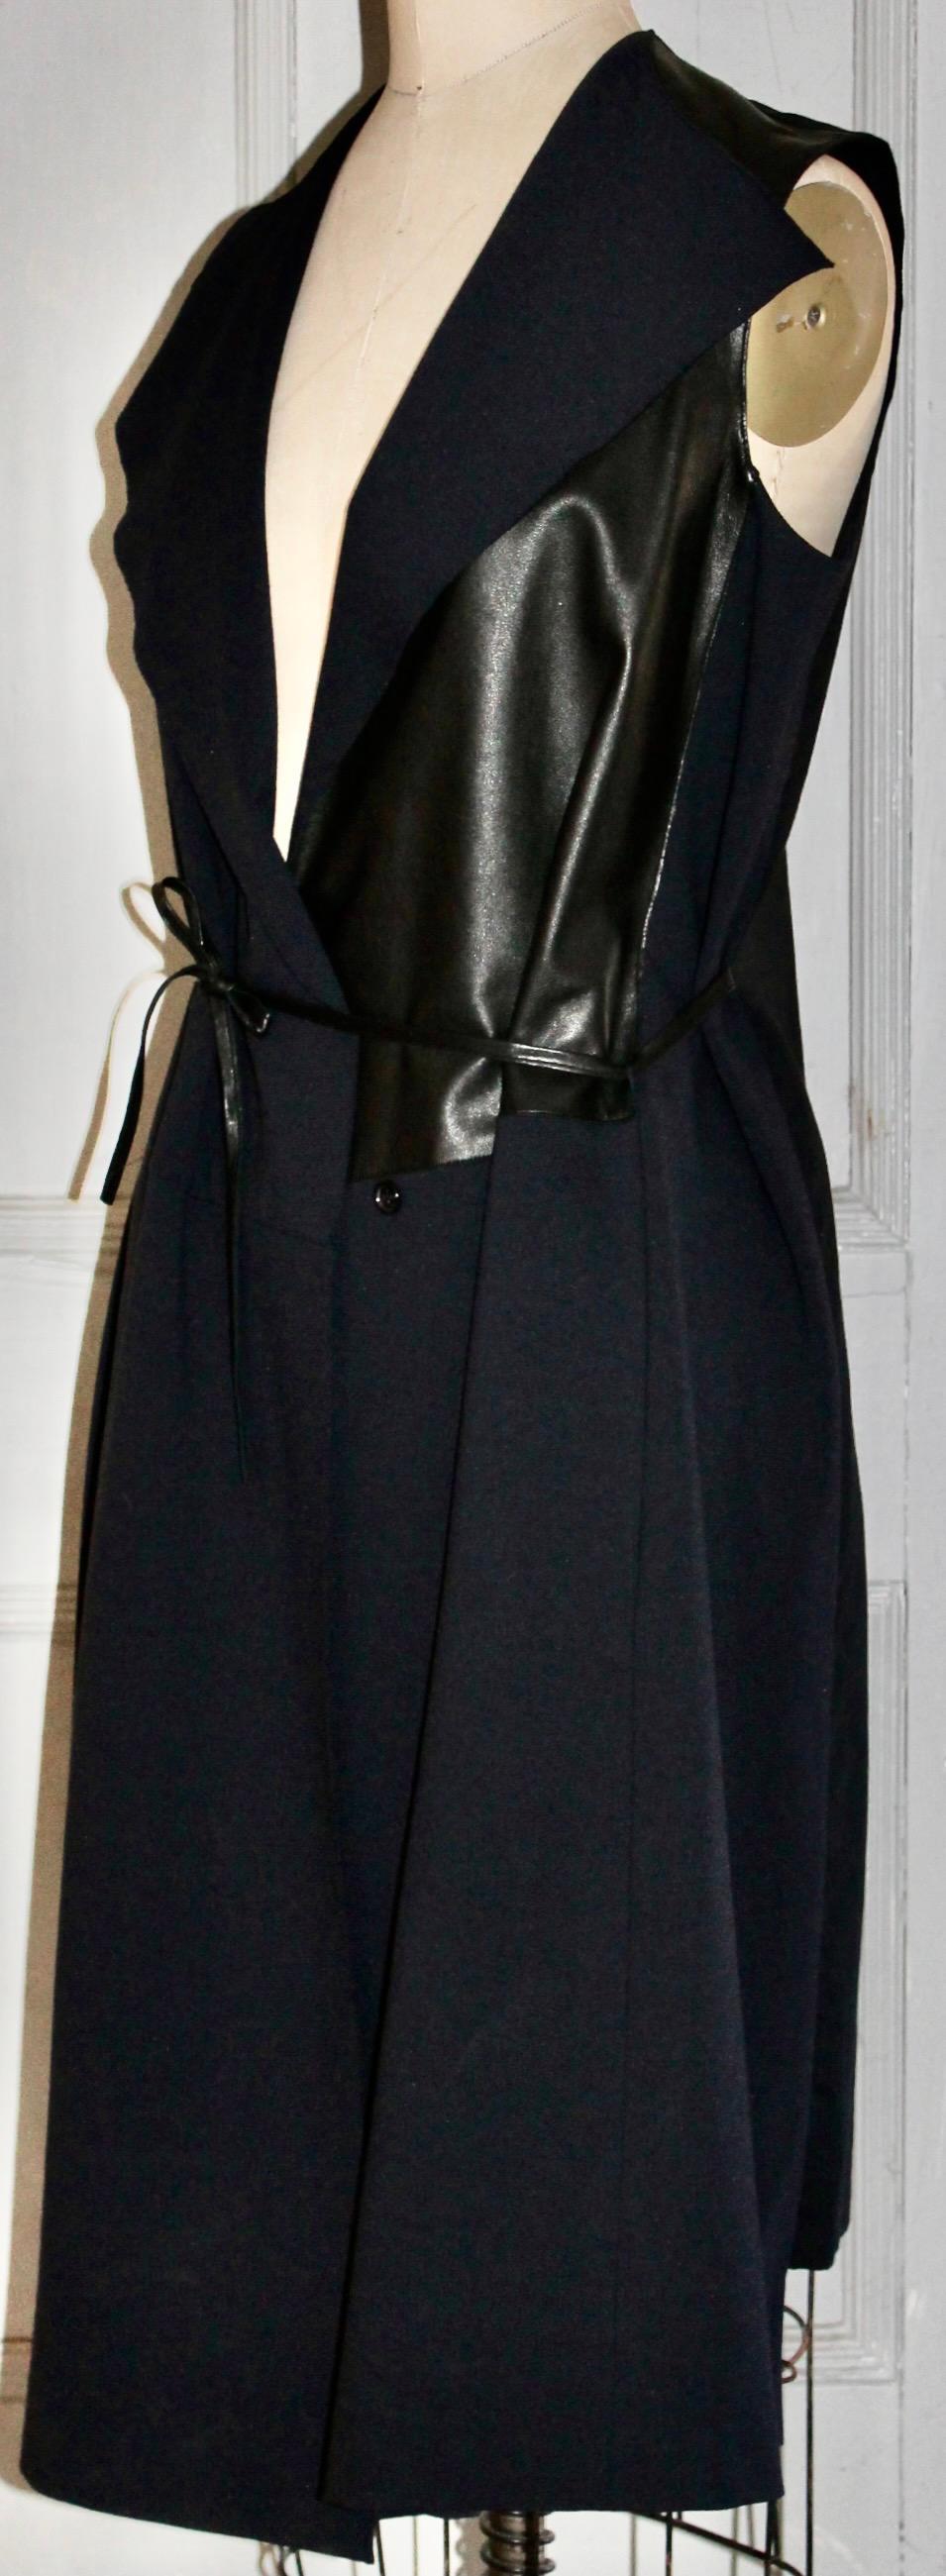 Yohji Yamamoto Black Leather Coat Dress For Sale 3